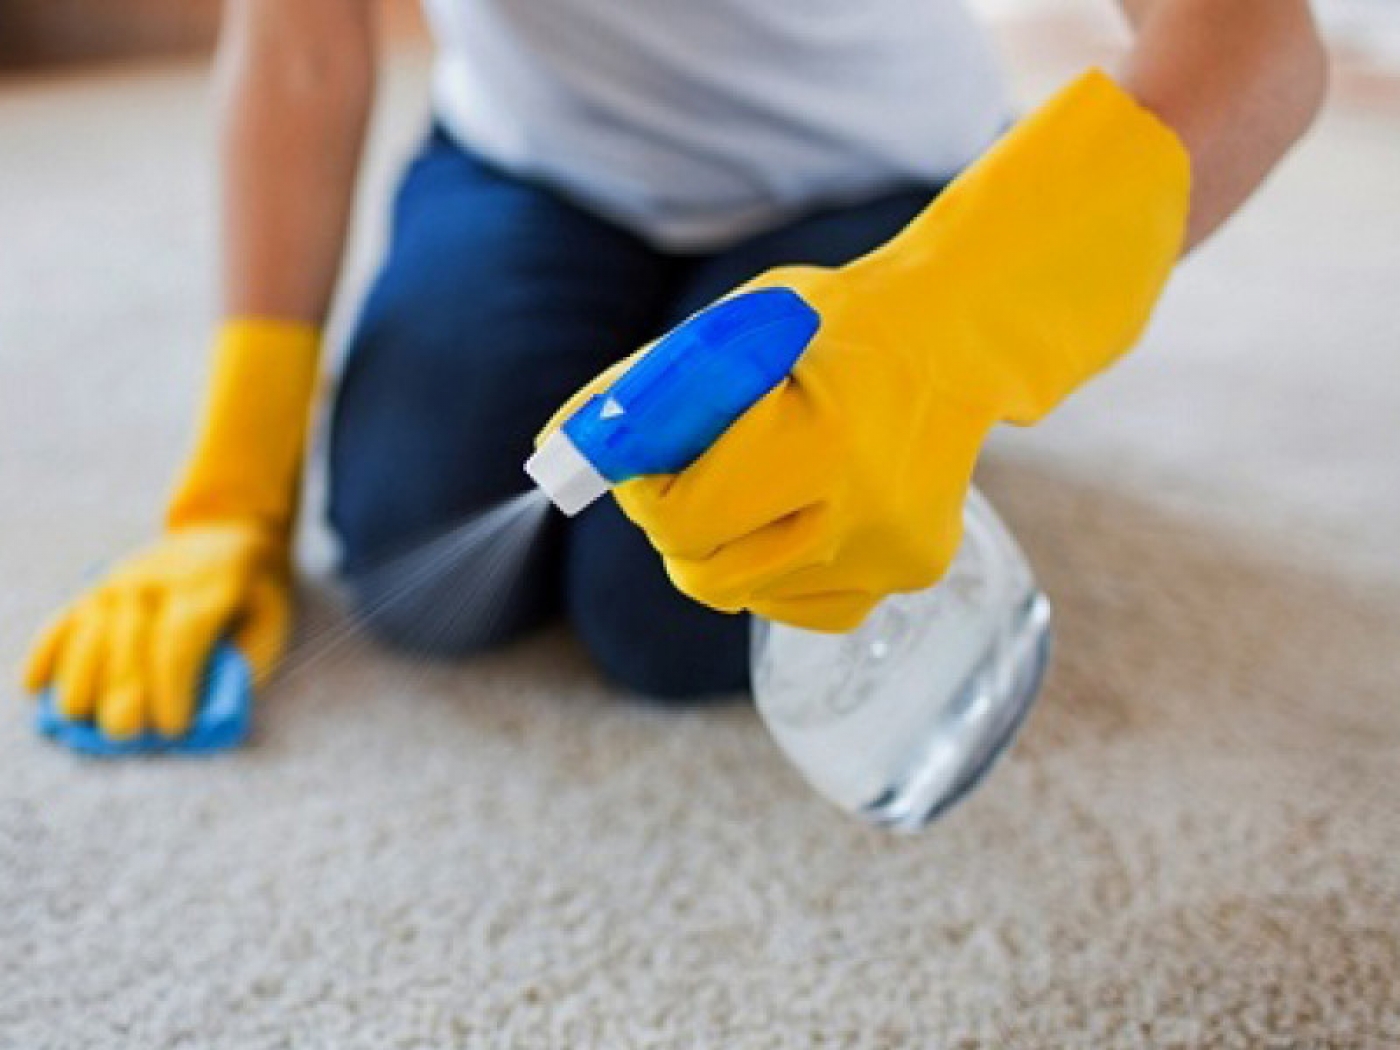 Carpet Cleaner Spray